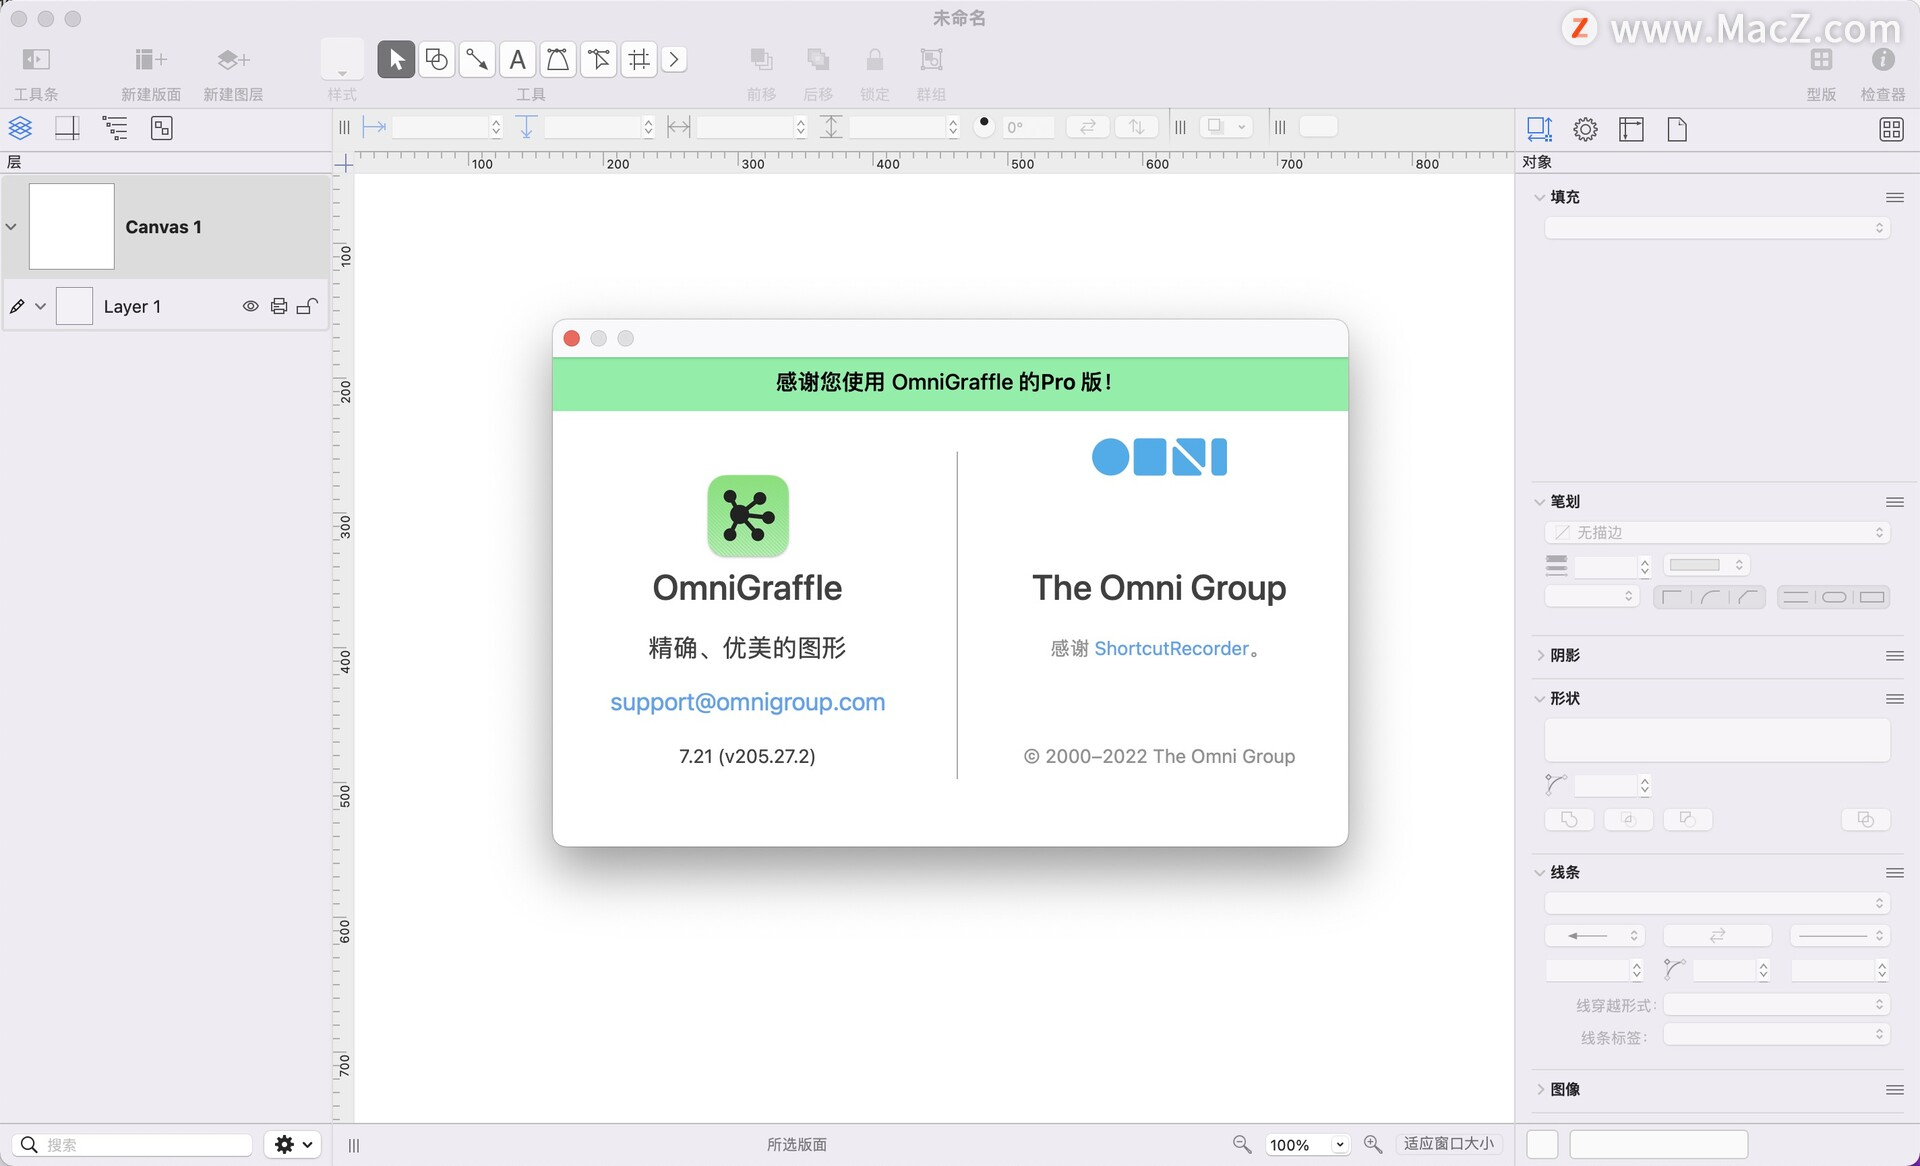 OmniGraffle Pro download the last version for apple